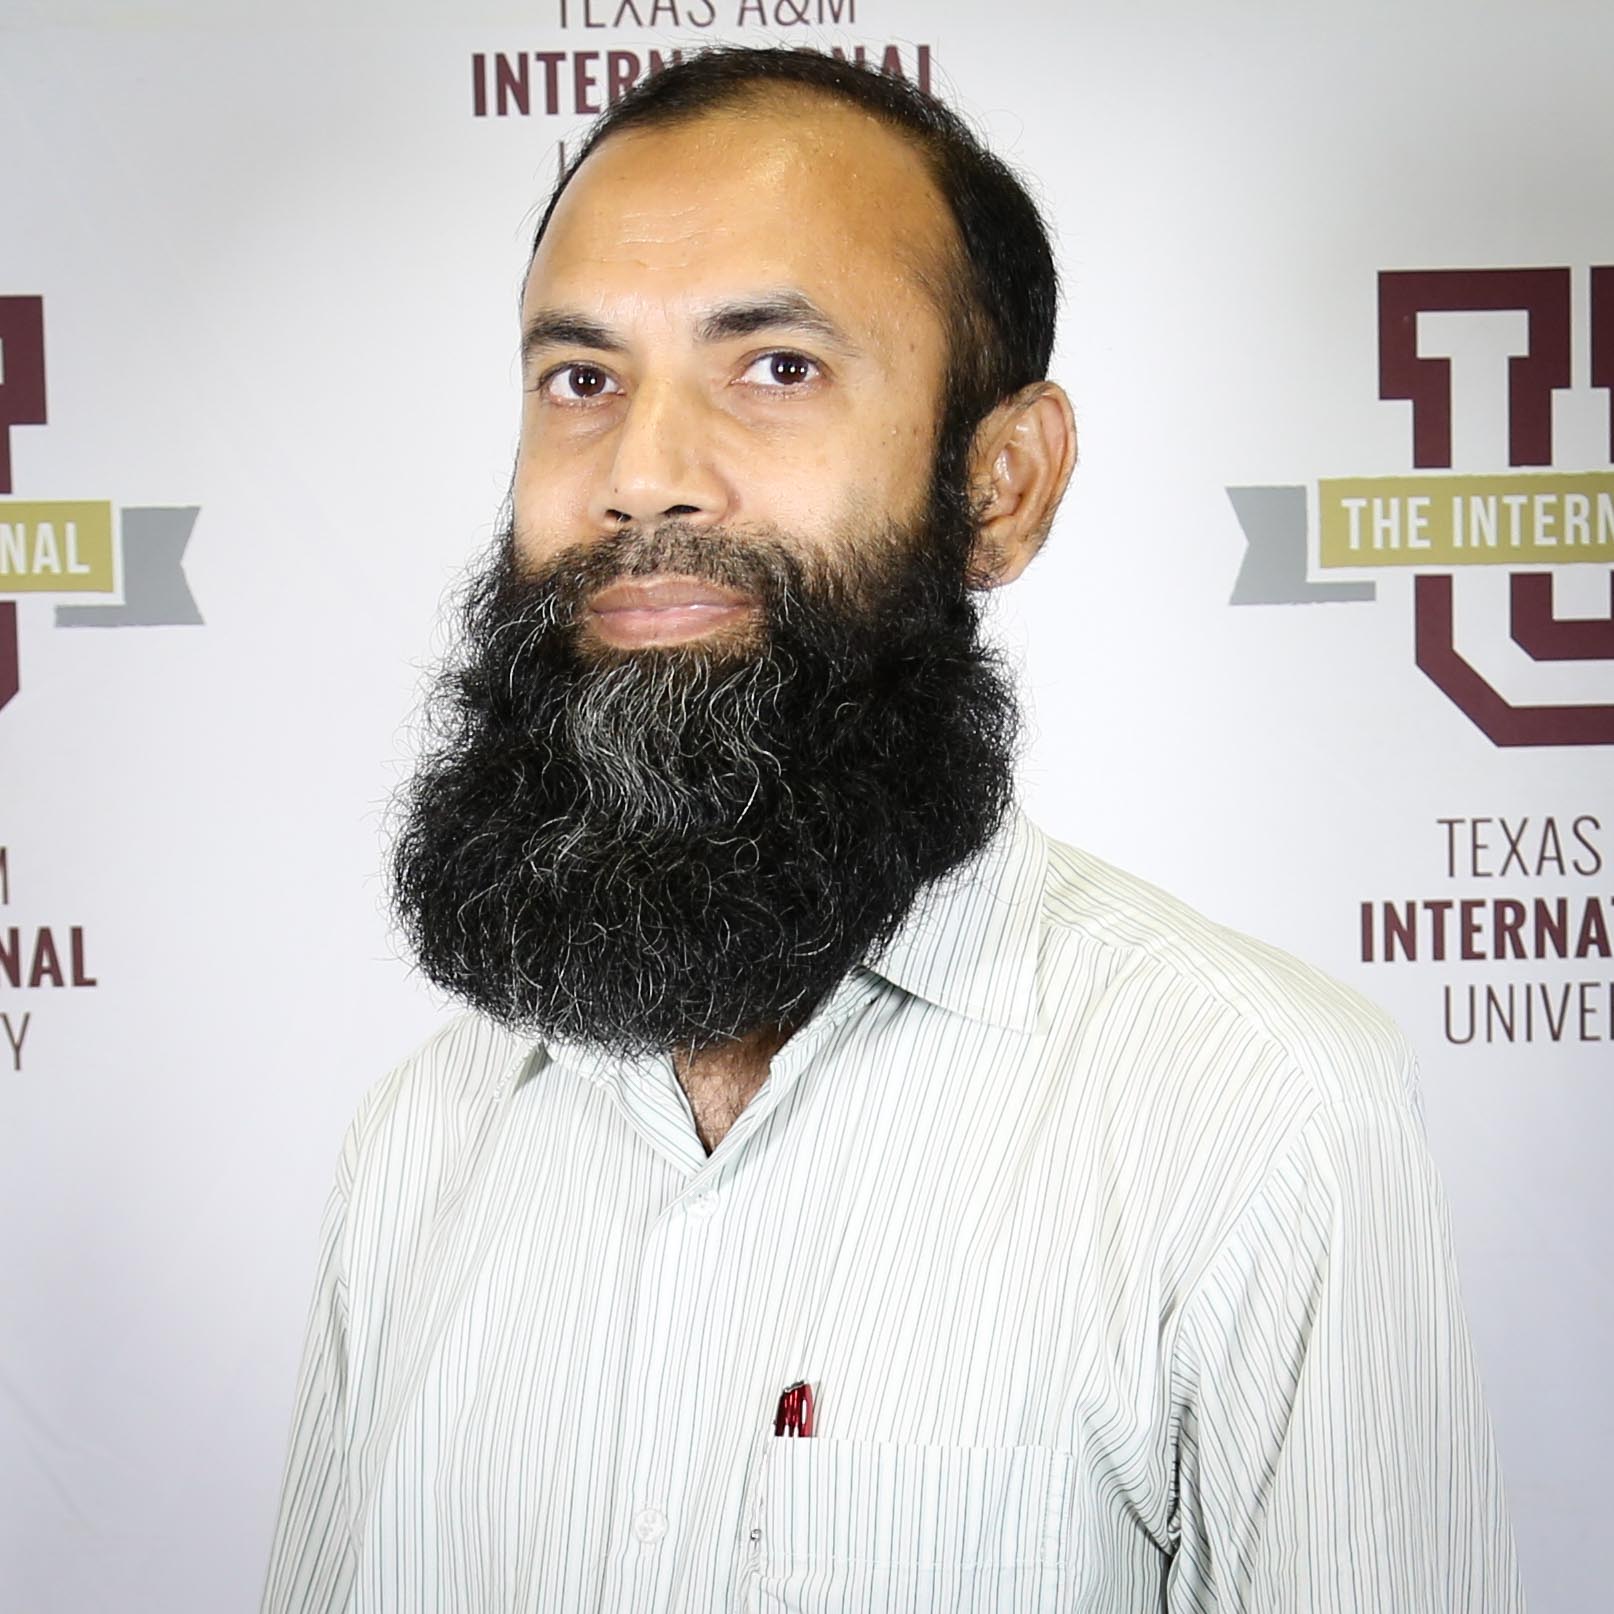 Dr. Muhammad Zafrul Hasan